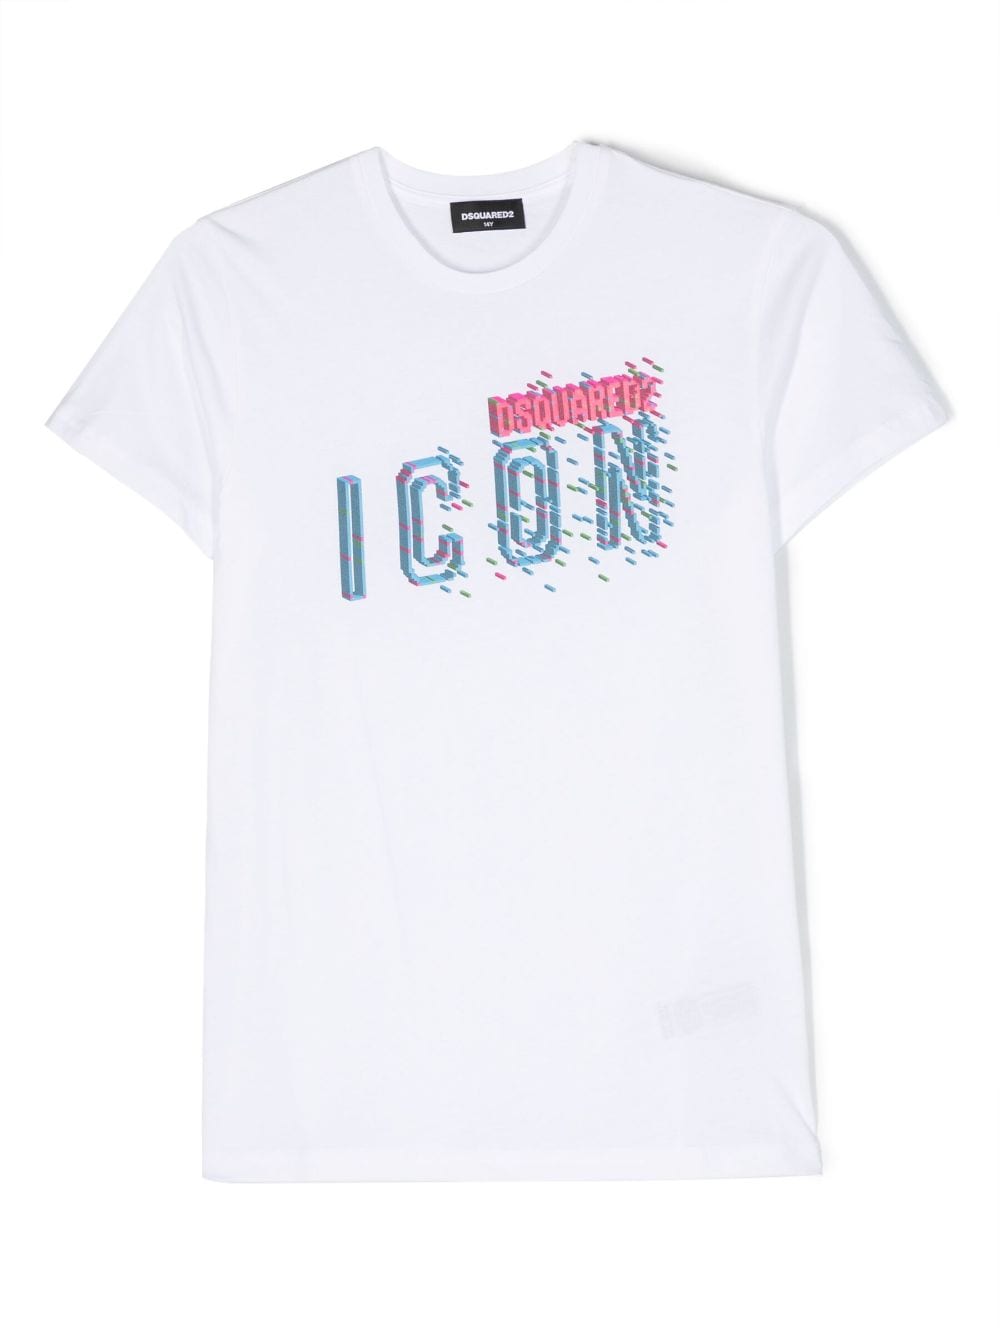 T-shirt bianca per bambino con stampa ICON